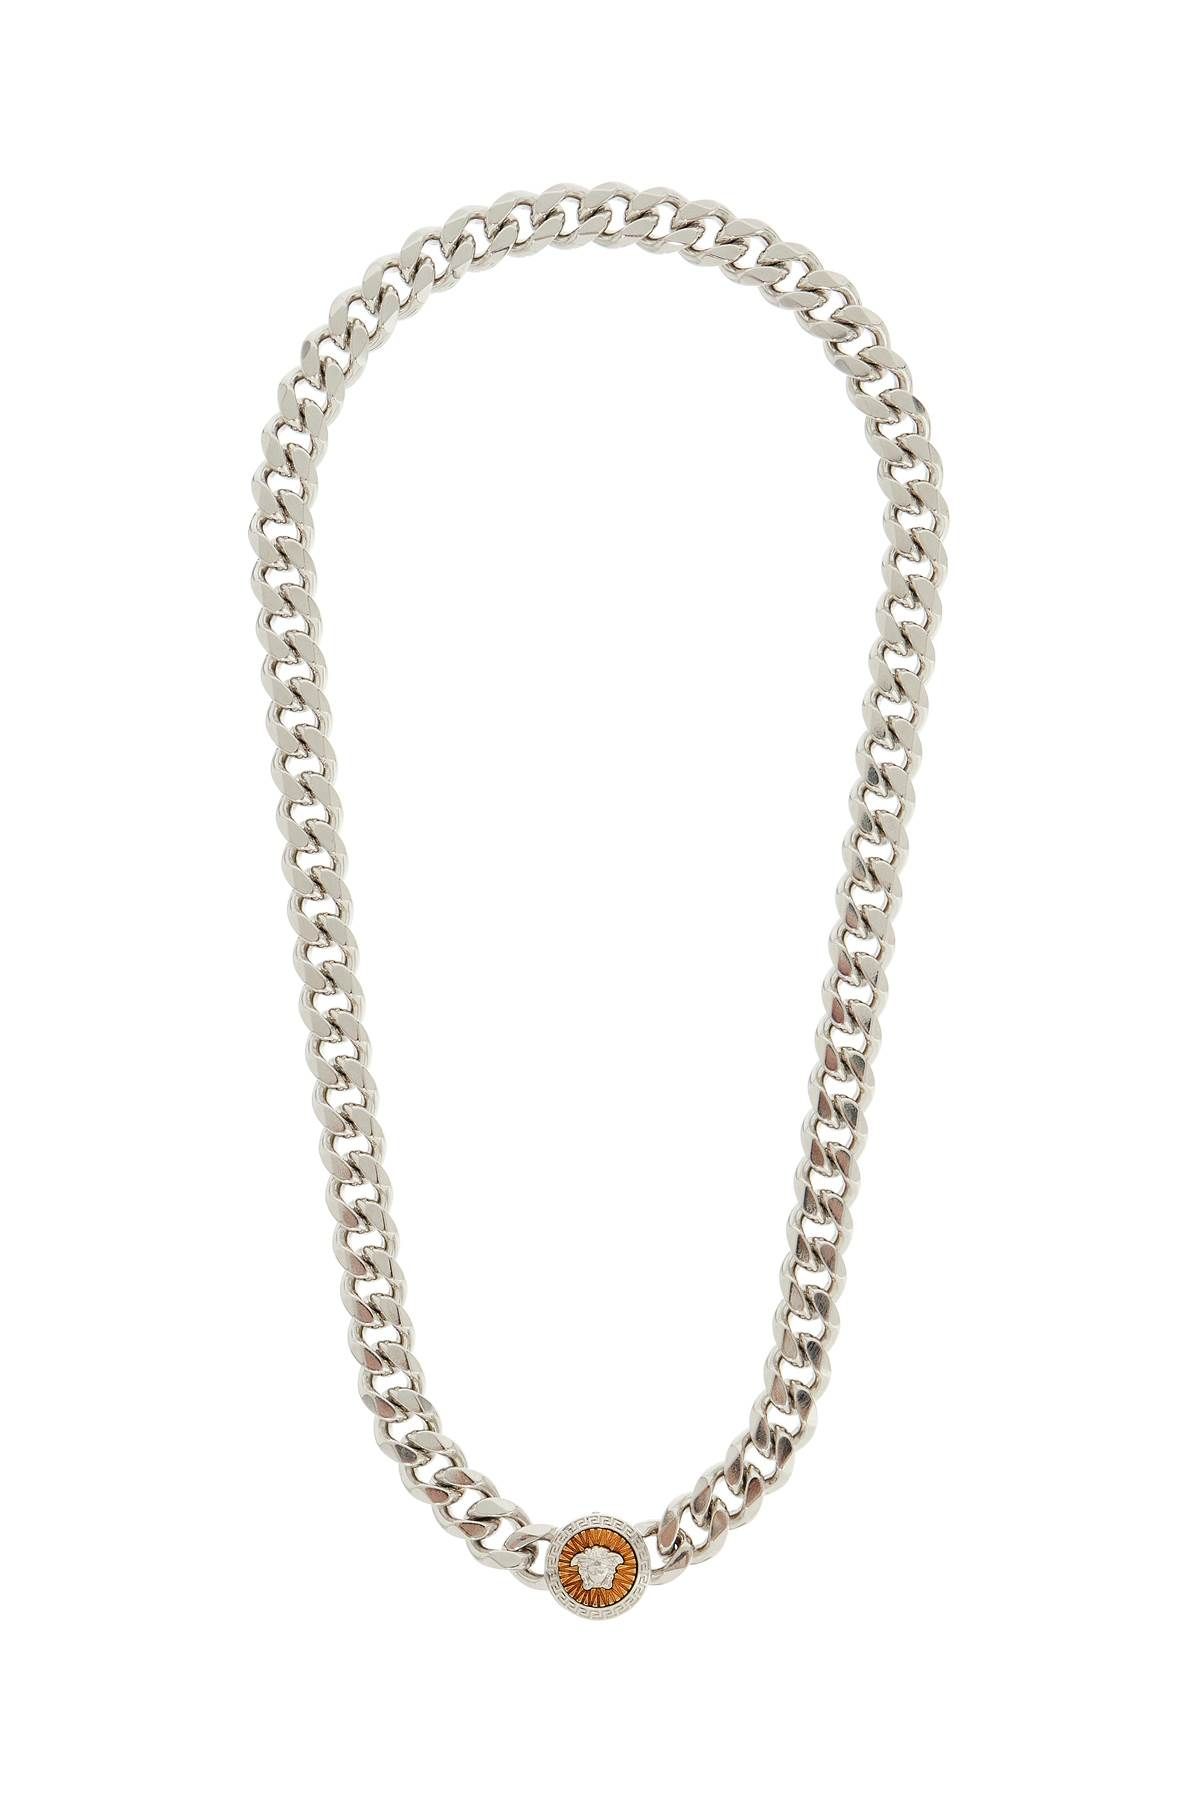 Versace VERSACE medusa chain necklace with pendant